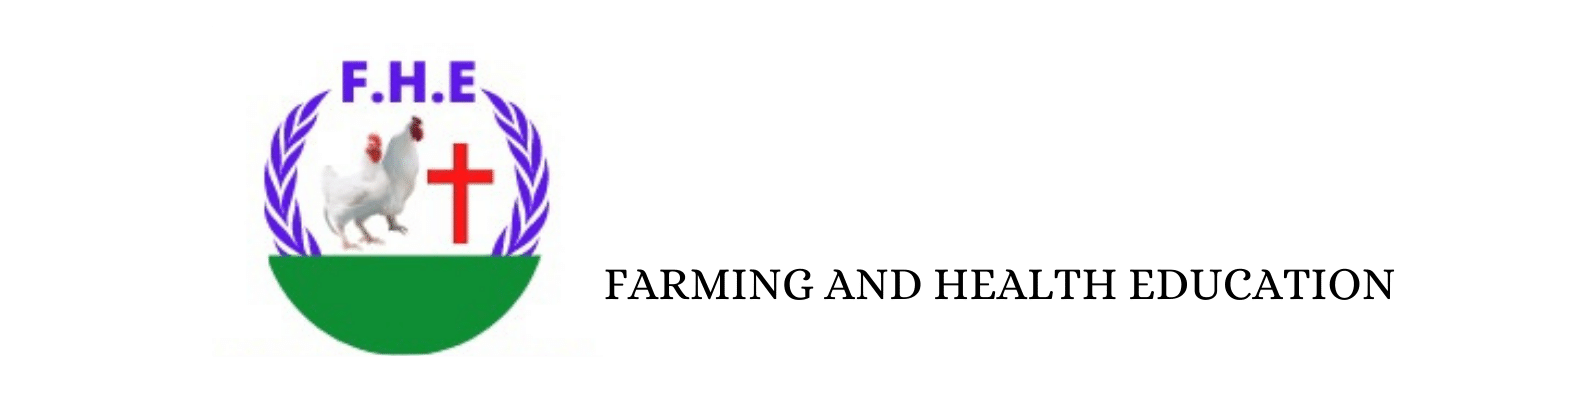 FARMING AND HEALTH EDUCATION